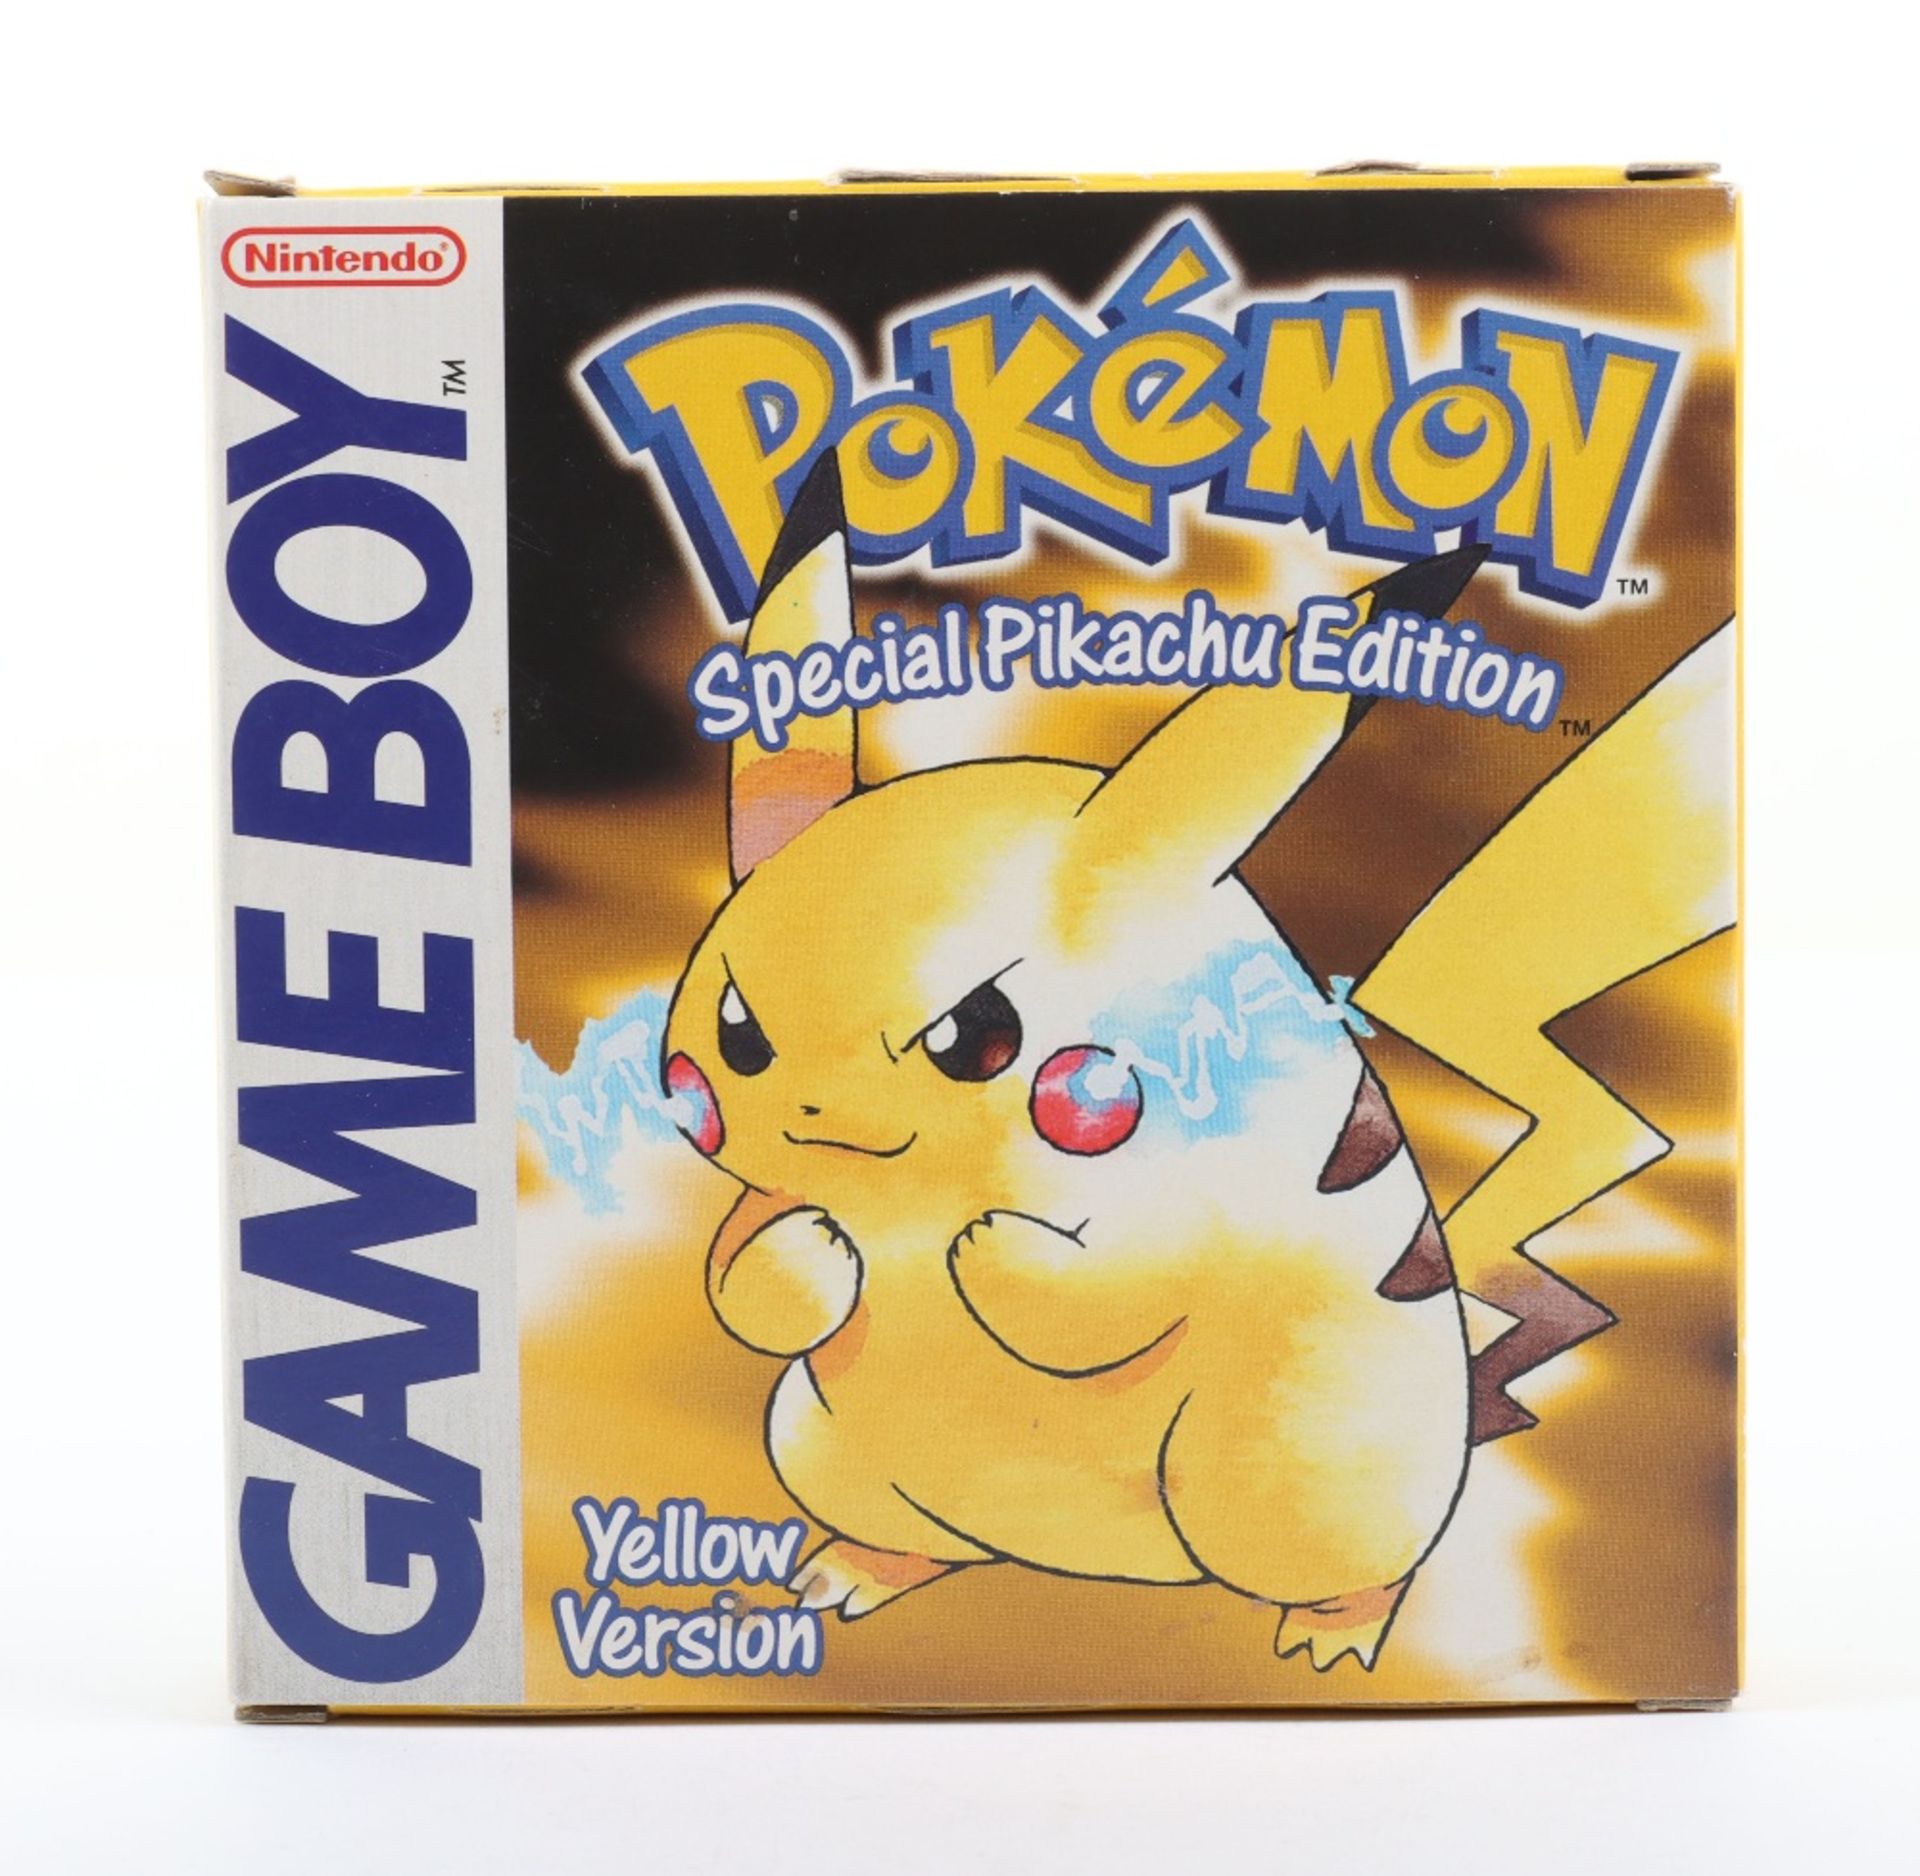 2000 Pokémon special Pikachu edition yellow version boxed